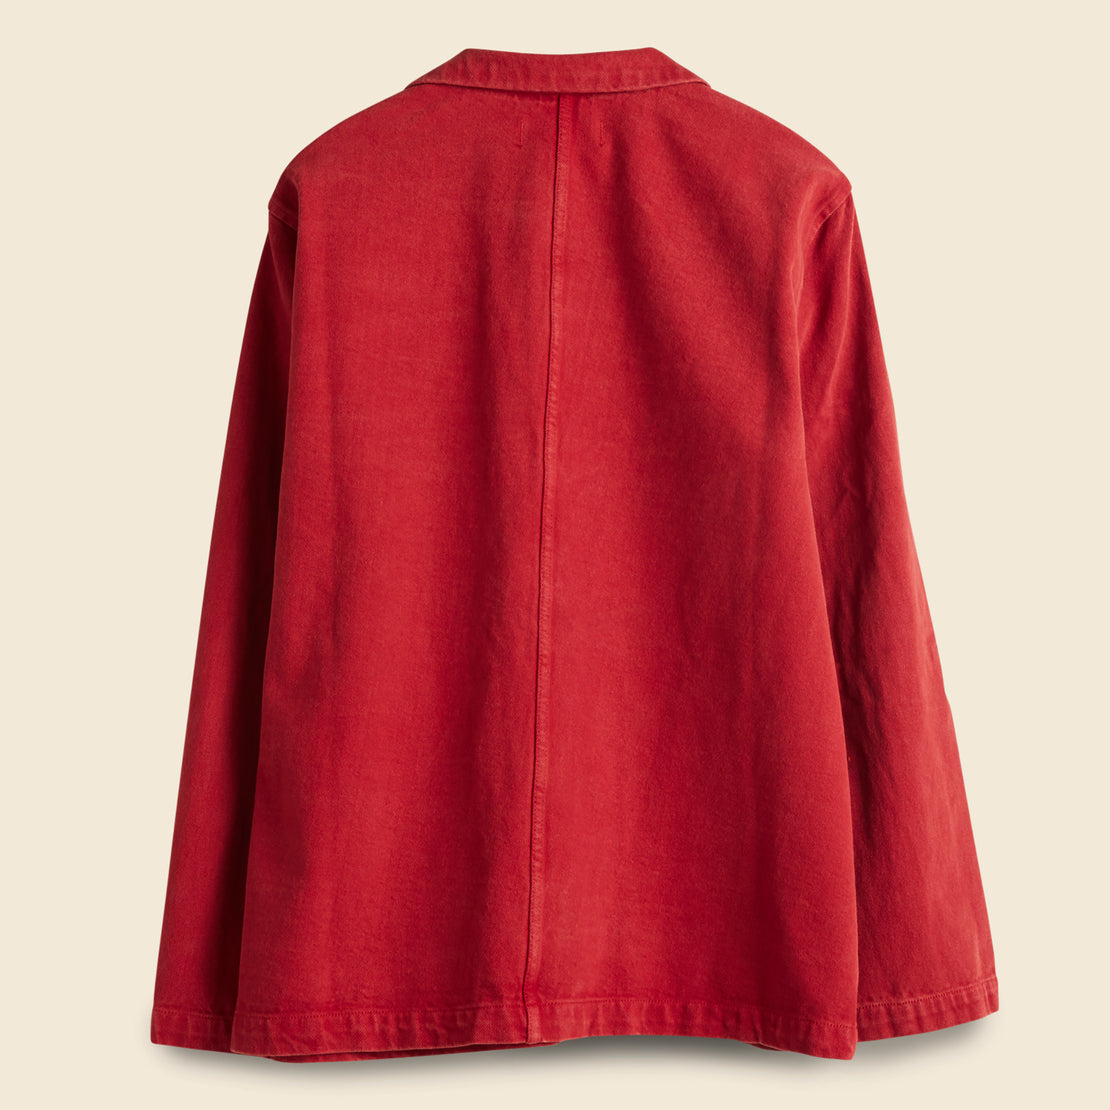 Britt Work Jacket - Paprika - Alex Mill - STAG Provisions - W - Outerwear - Coat/Jacket